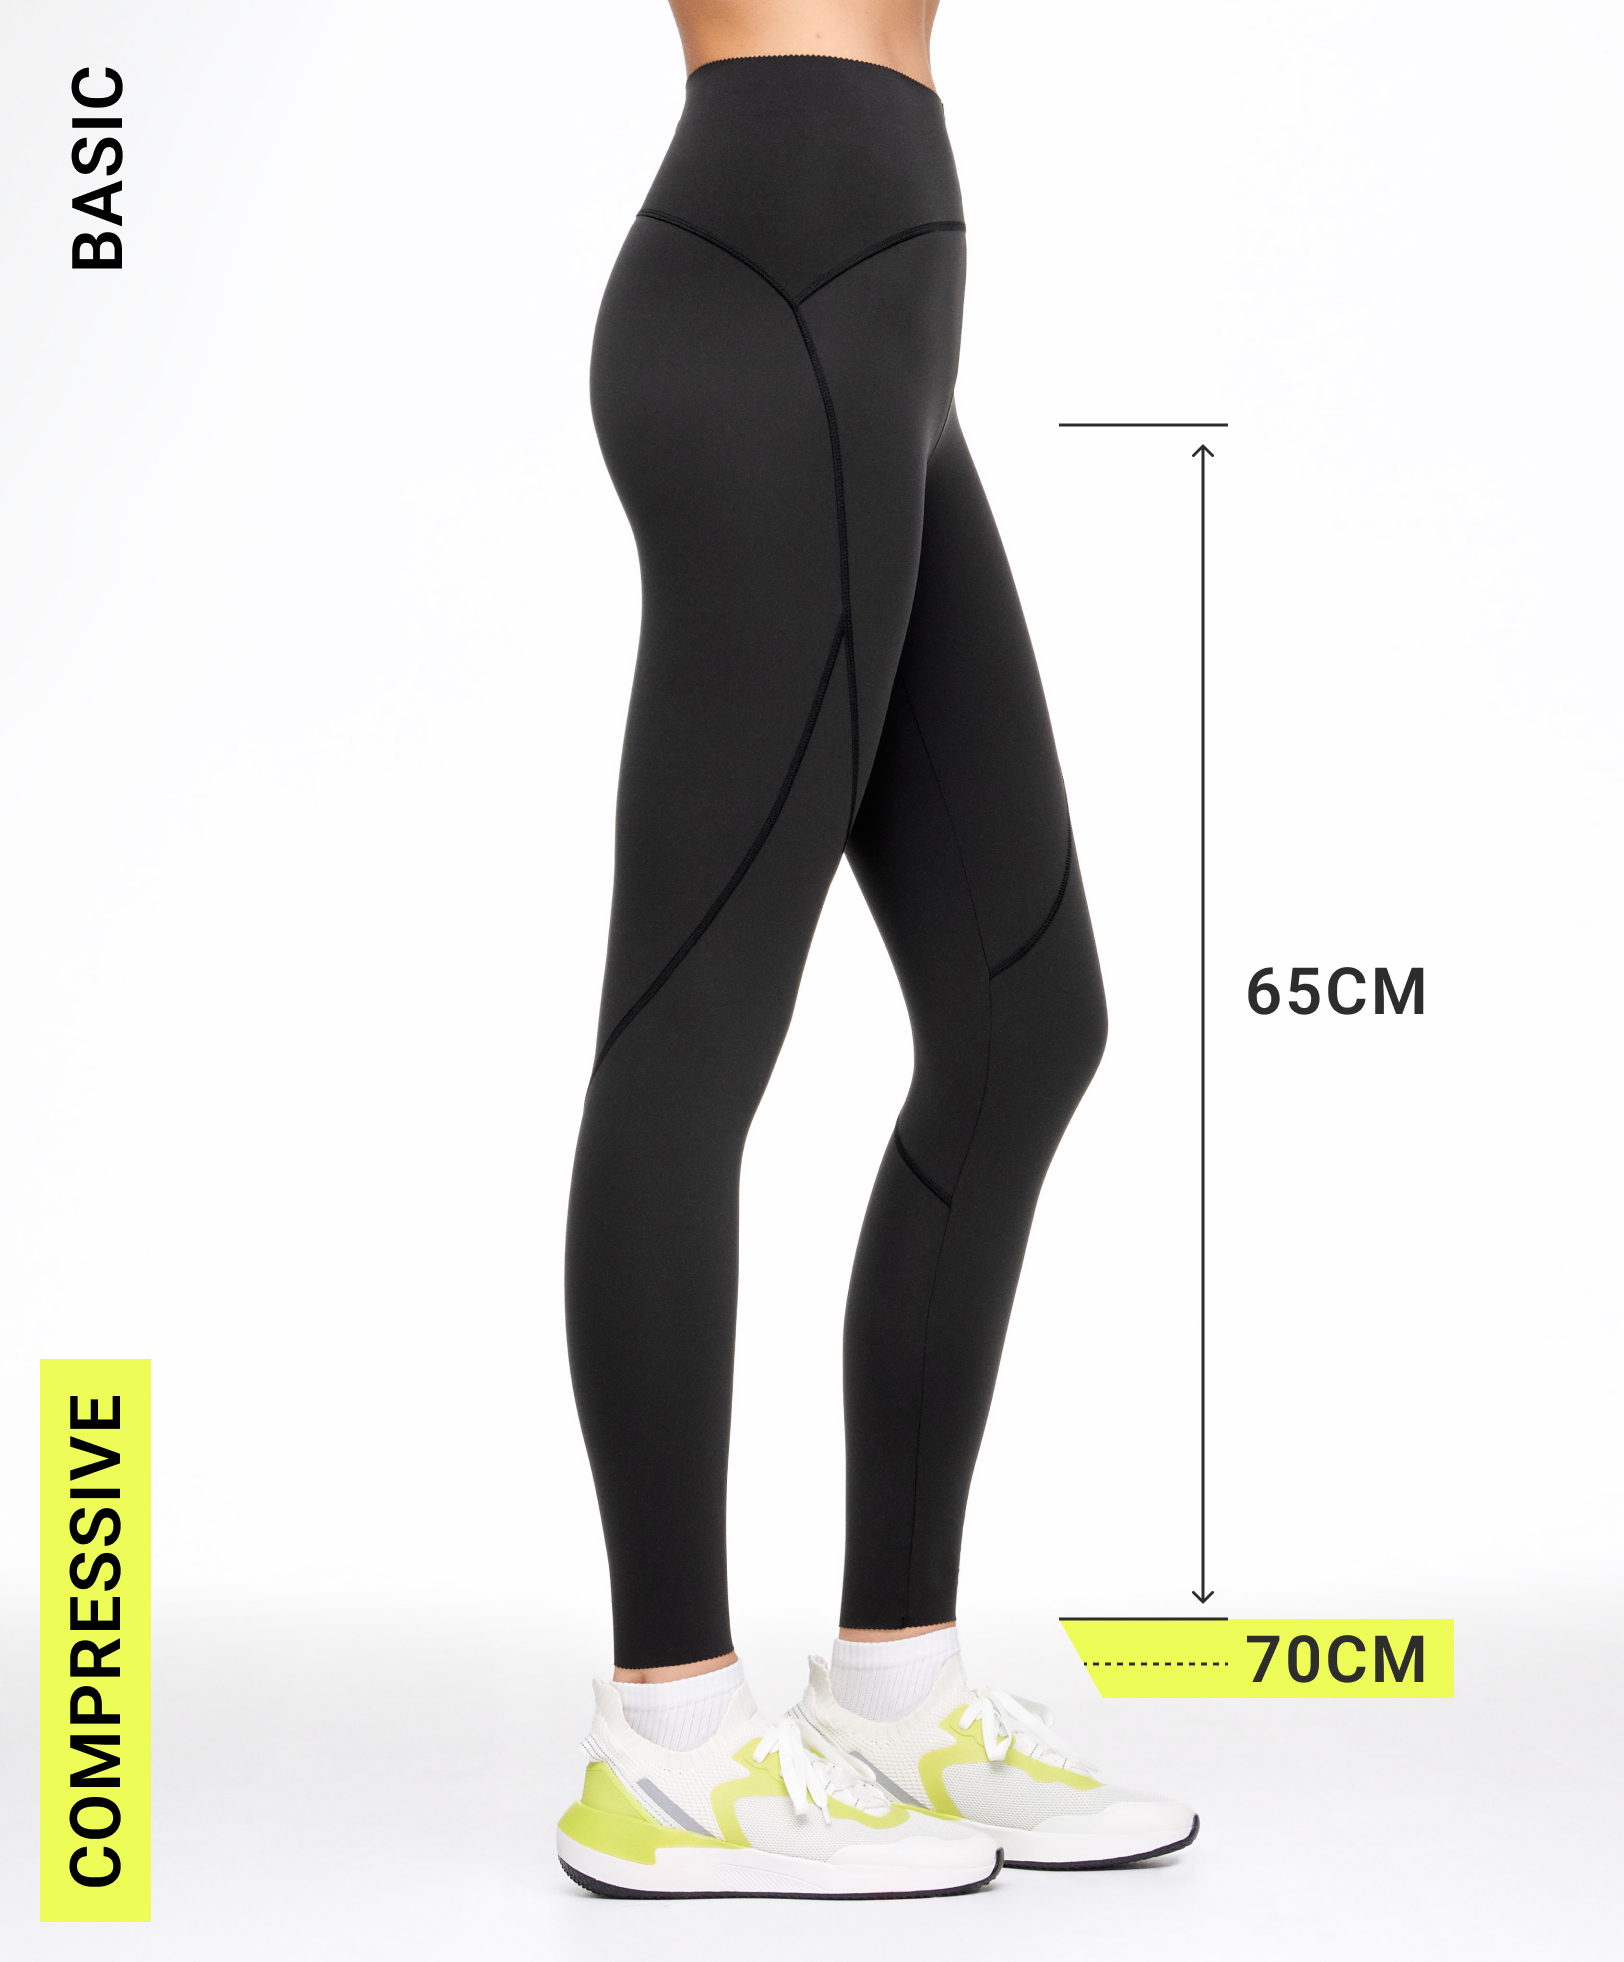 Basic compressive ankle-length leggings